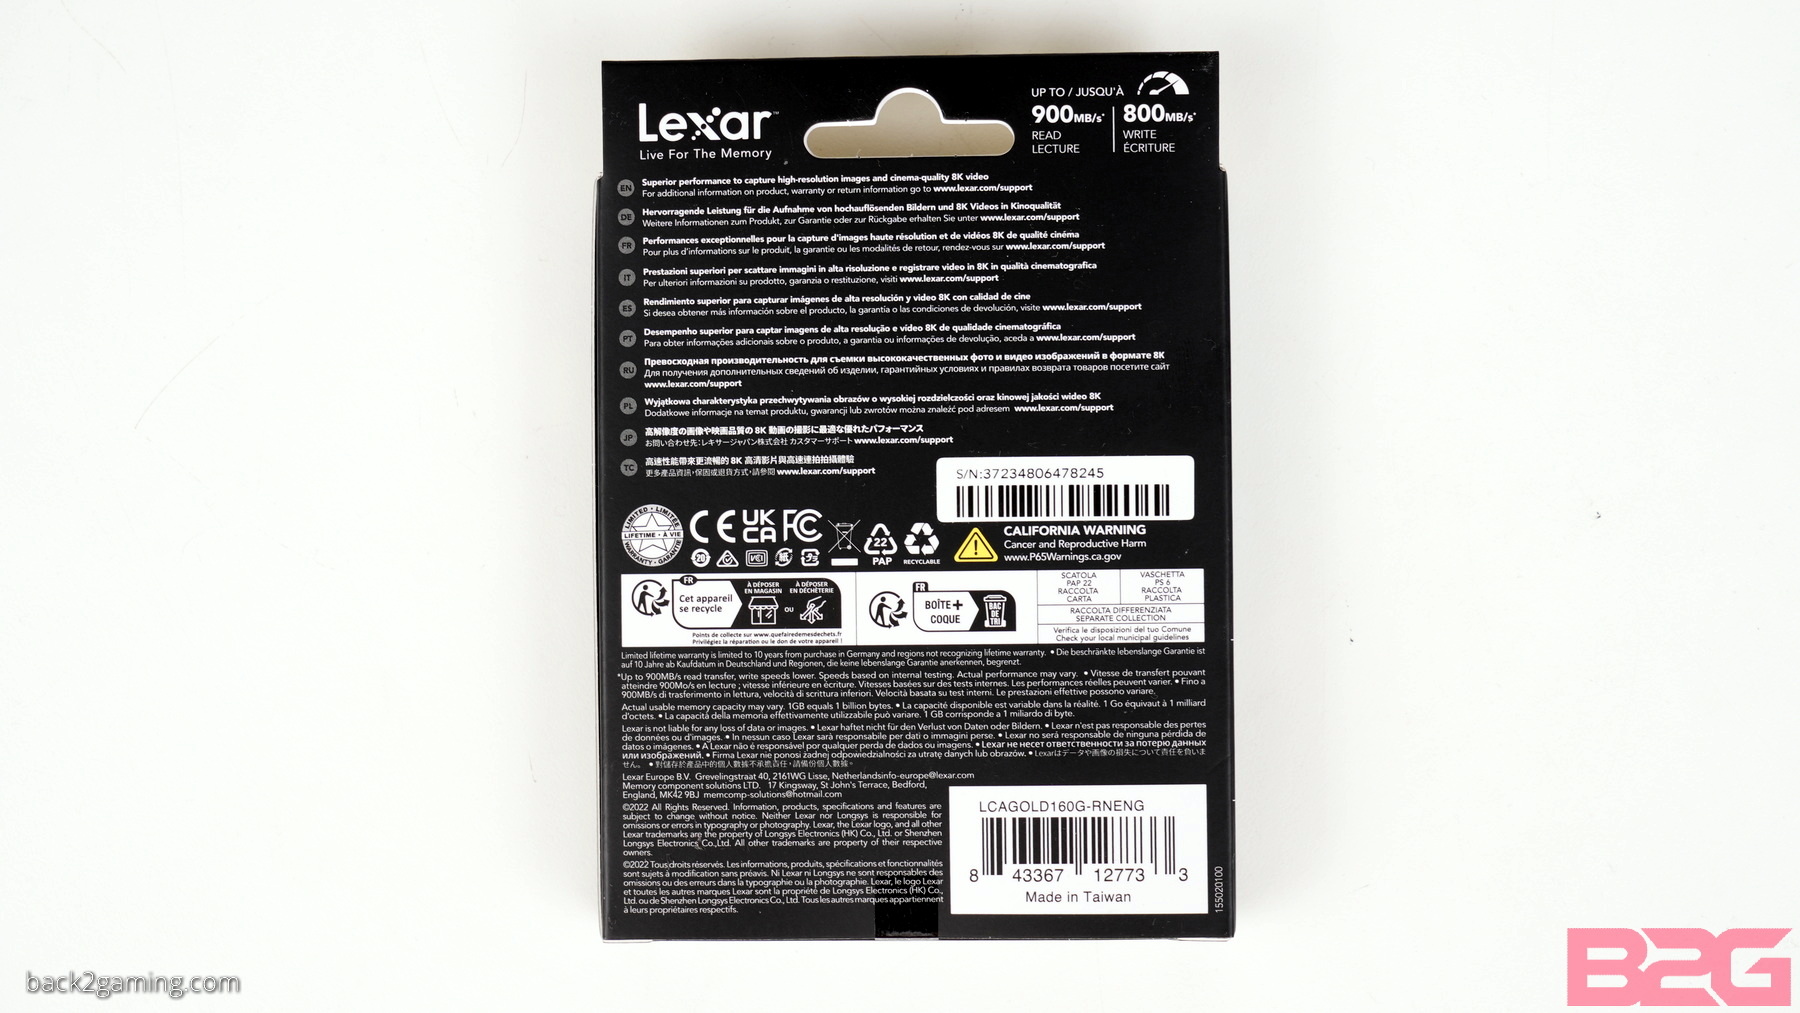 Lexar CFexpress Type A Professional GOLD Series Card Review - returnal